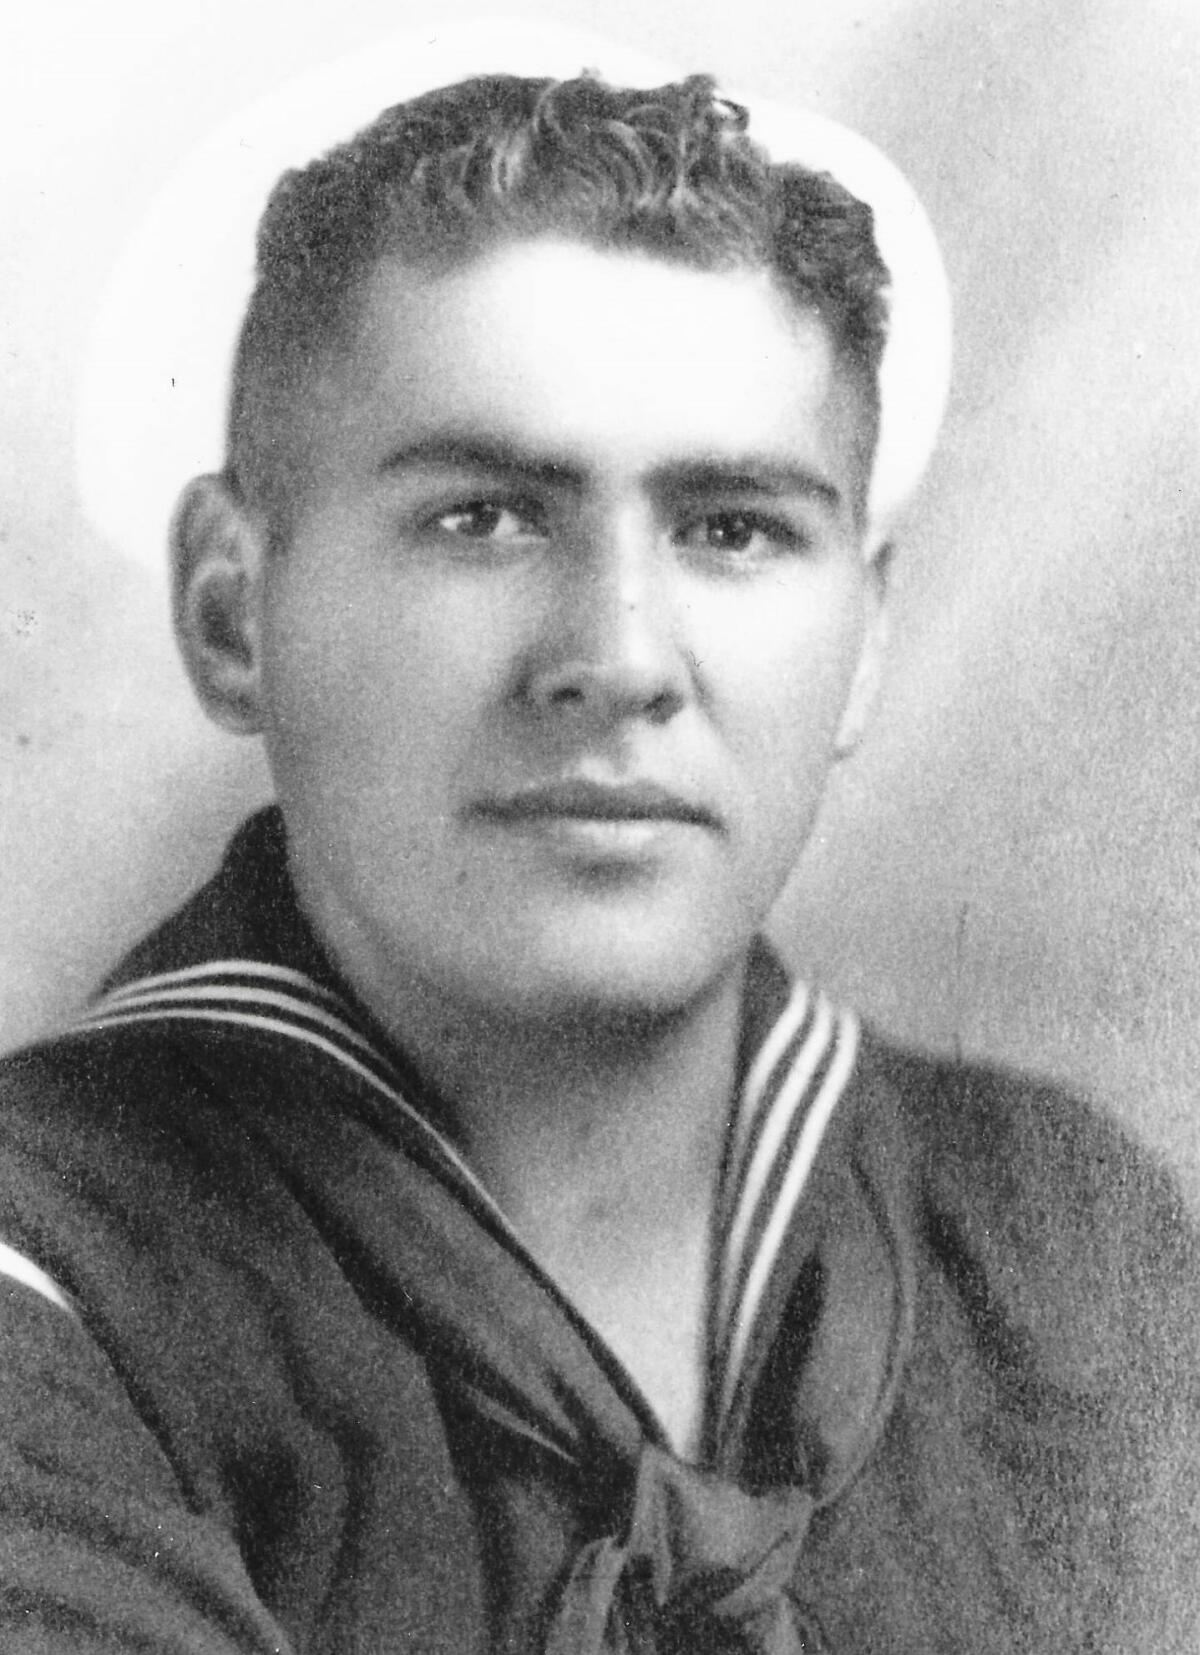 U.S. Navy Second Class Claude Ralph Garcia, from Ventura